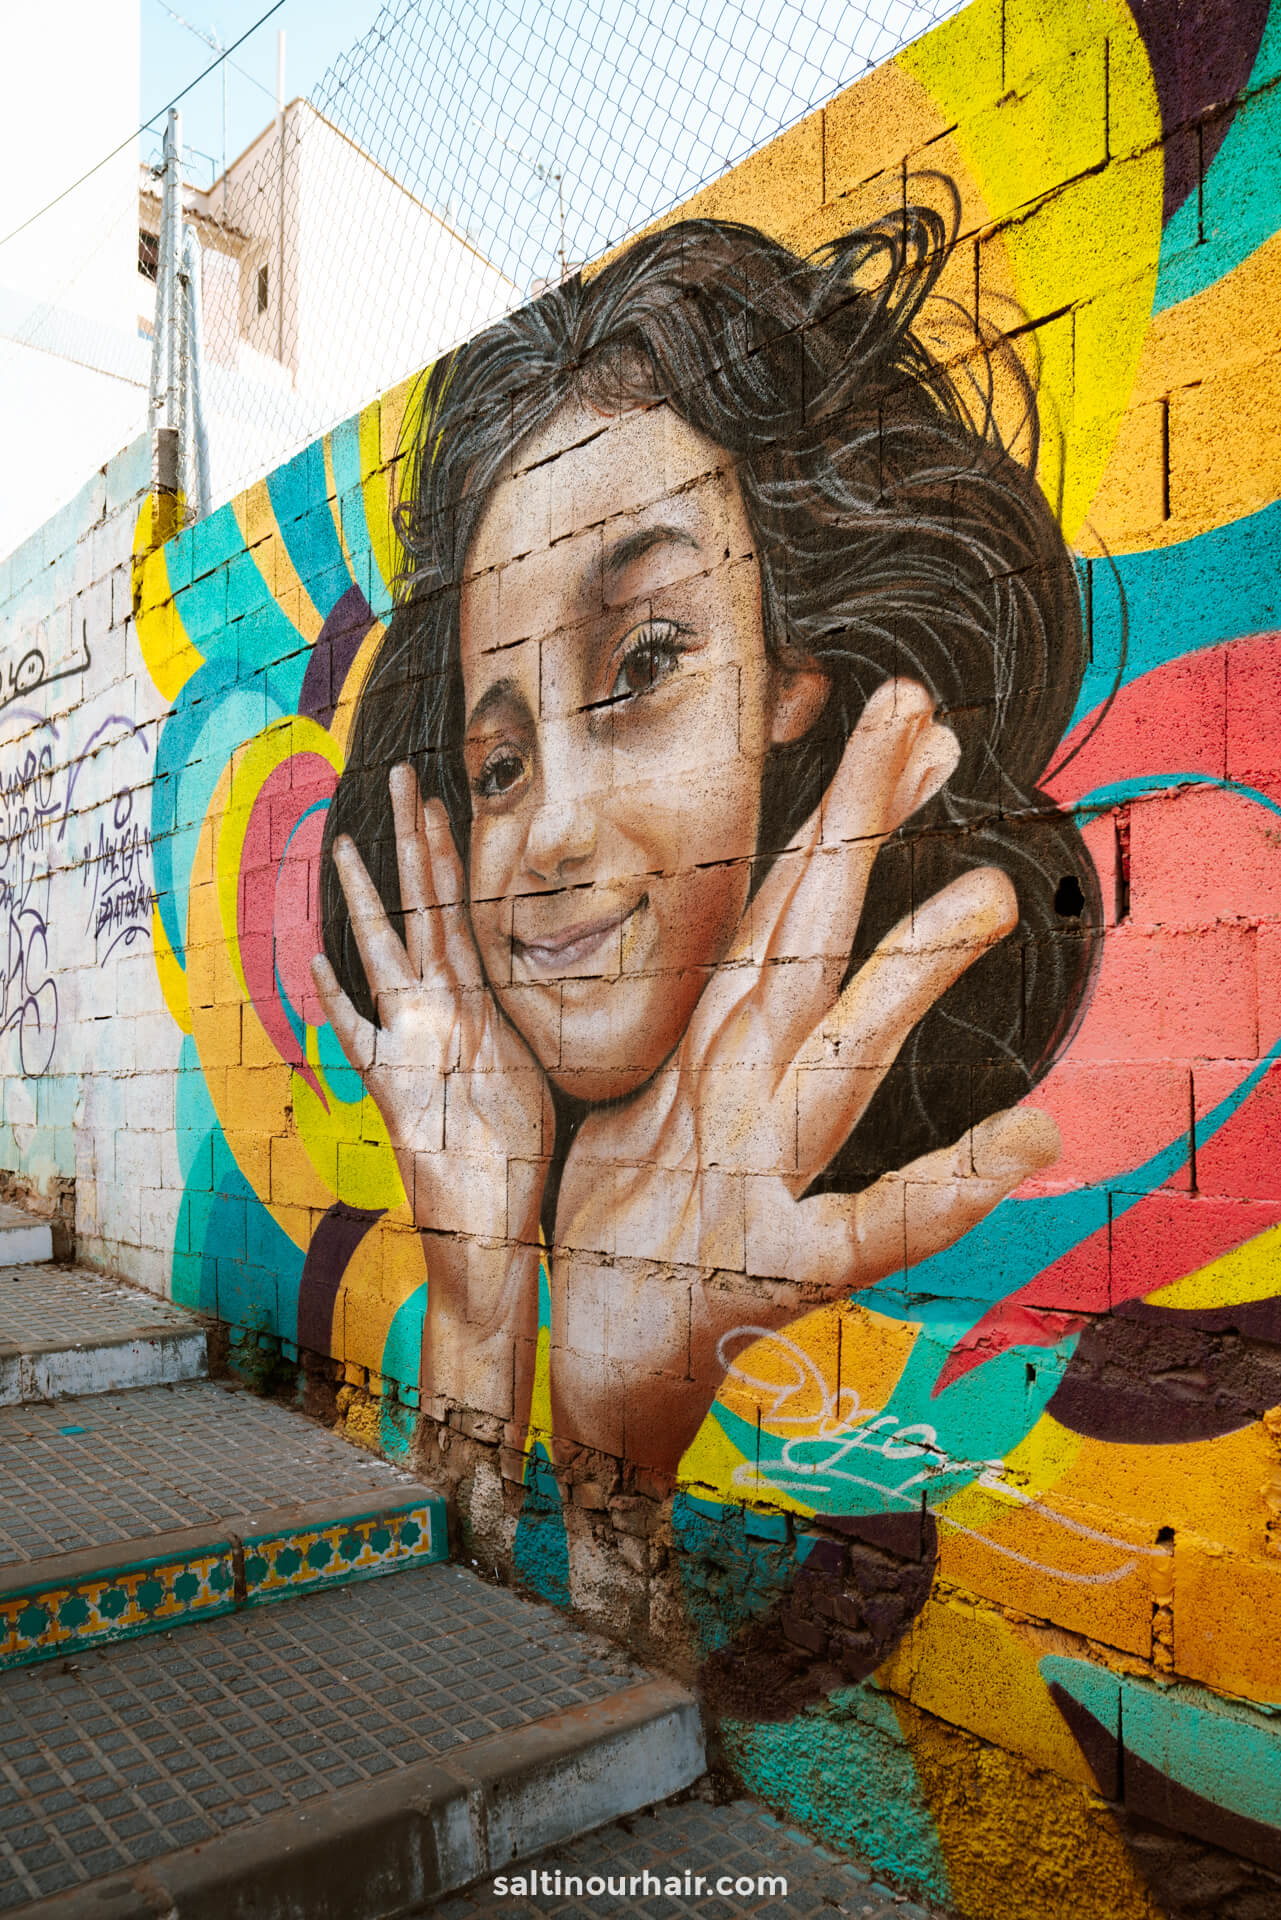 malaga spain street art